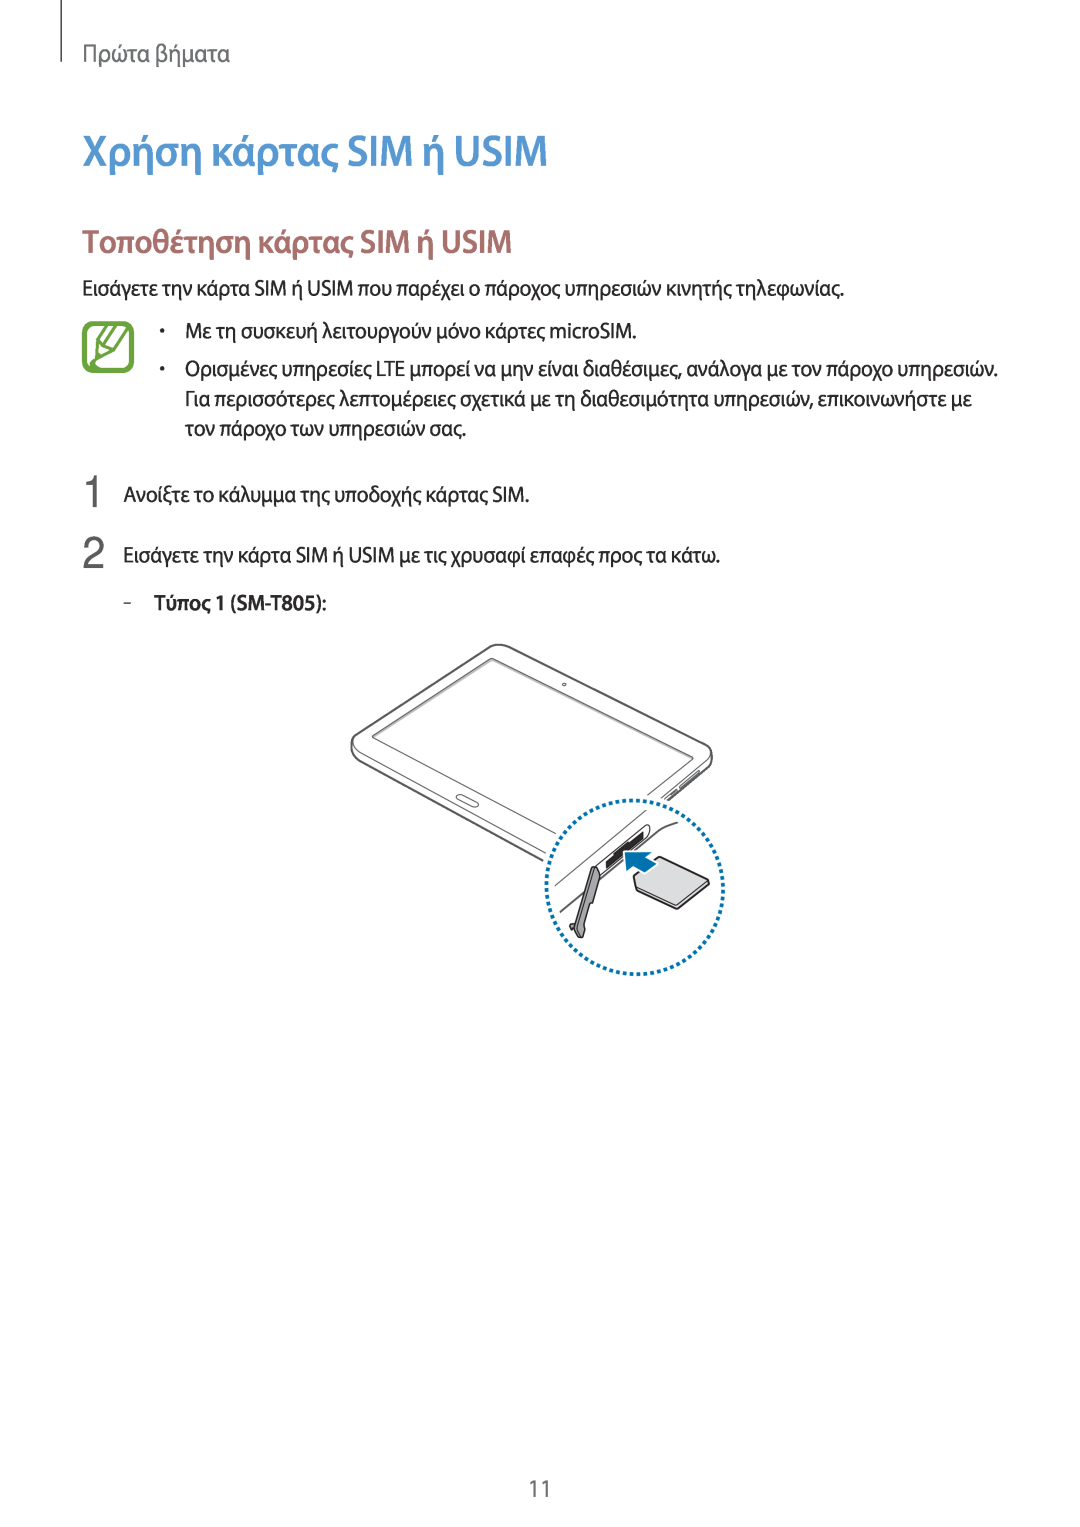 Samsung SM-T705NTSAEUR manual Χρήση κάρτας SIM ή USIM, Τοποθέτηση κάρτας SIM ή USIM, Πρώτα βήματα, Τύπος 1 SM-T805 